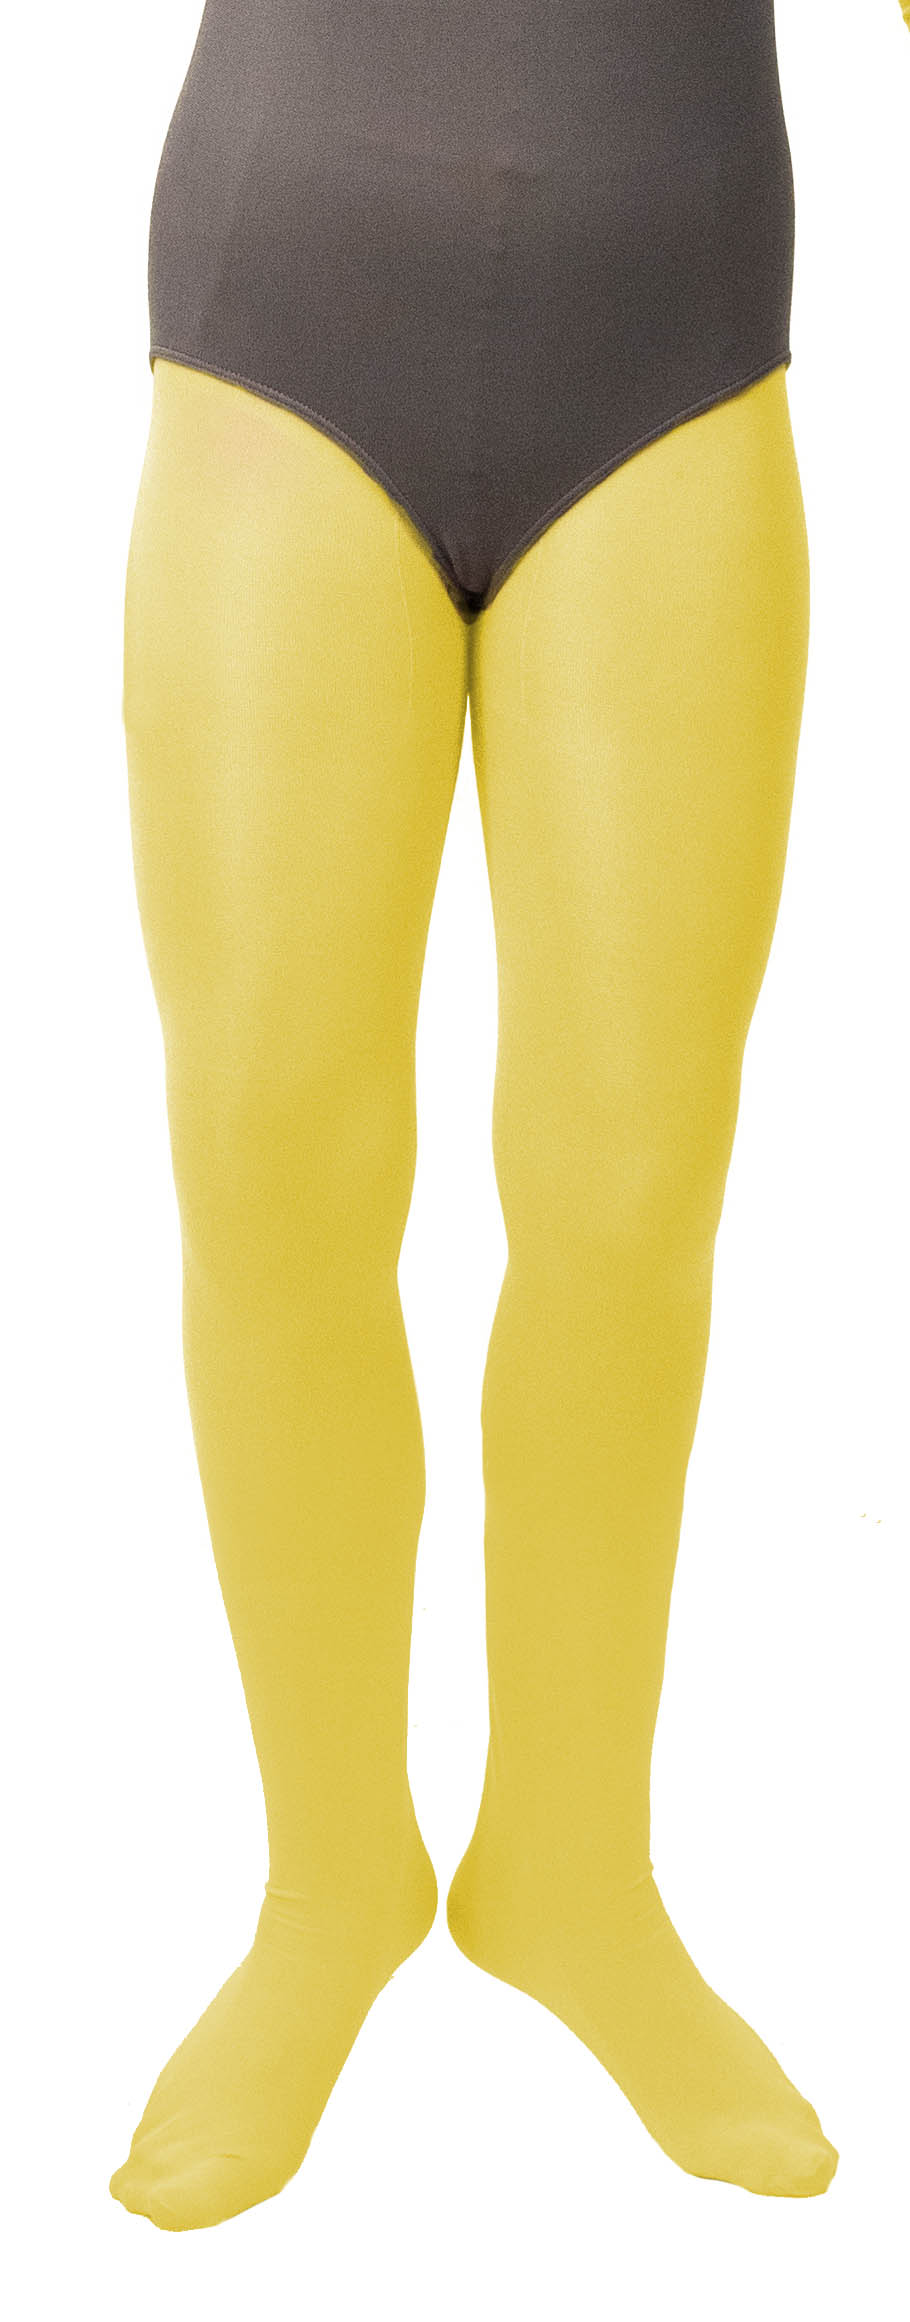 Opaque tights, lemon yellow